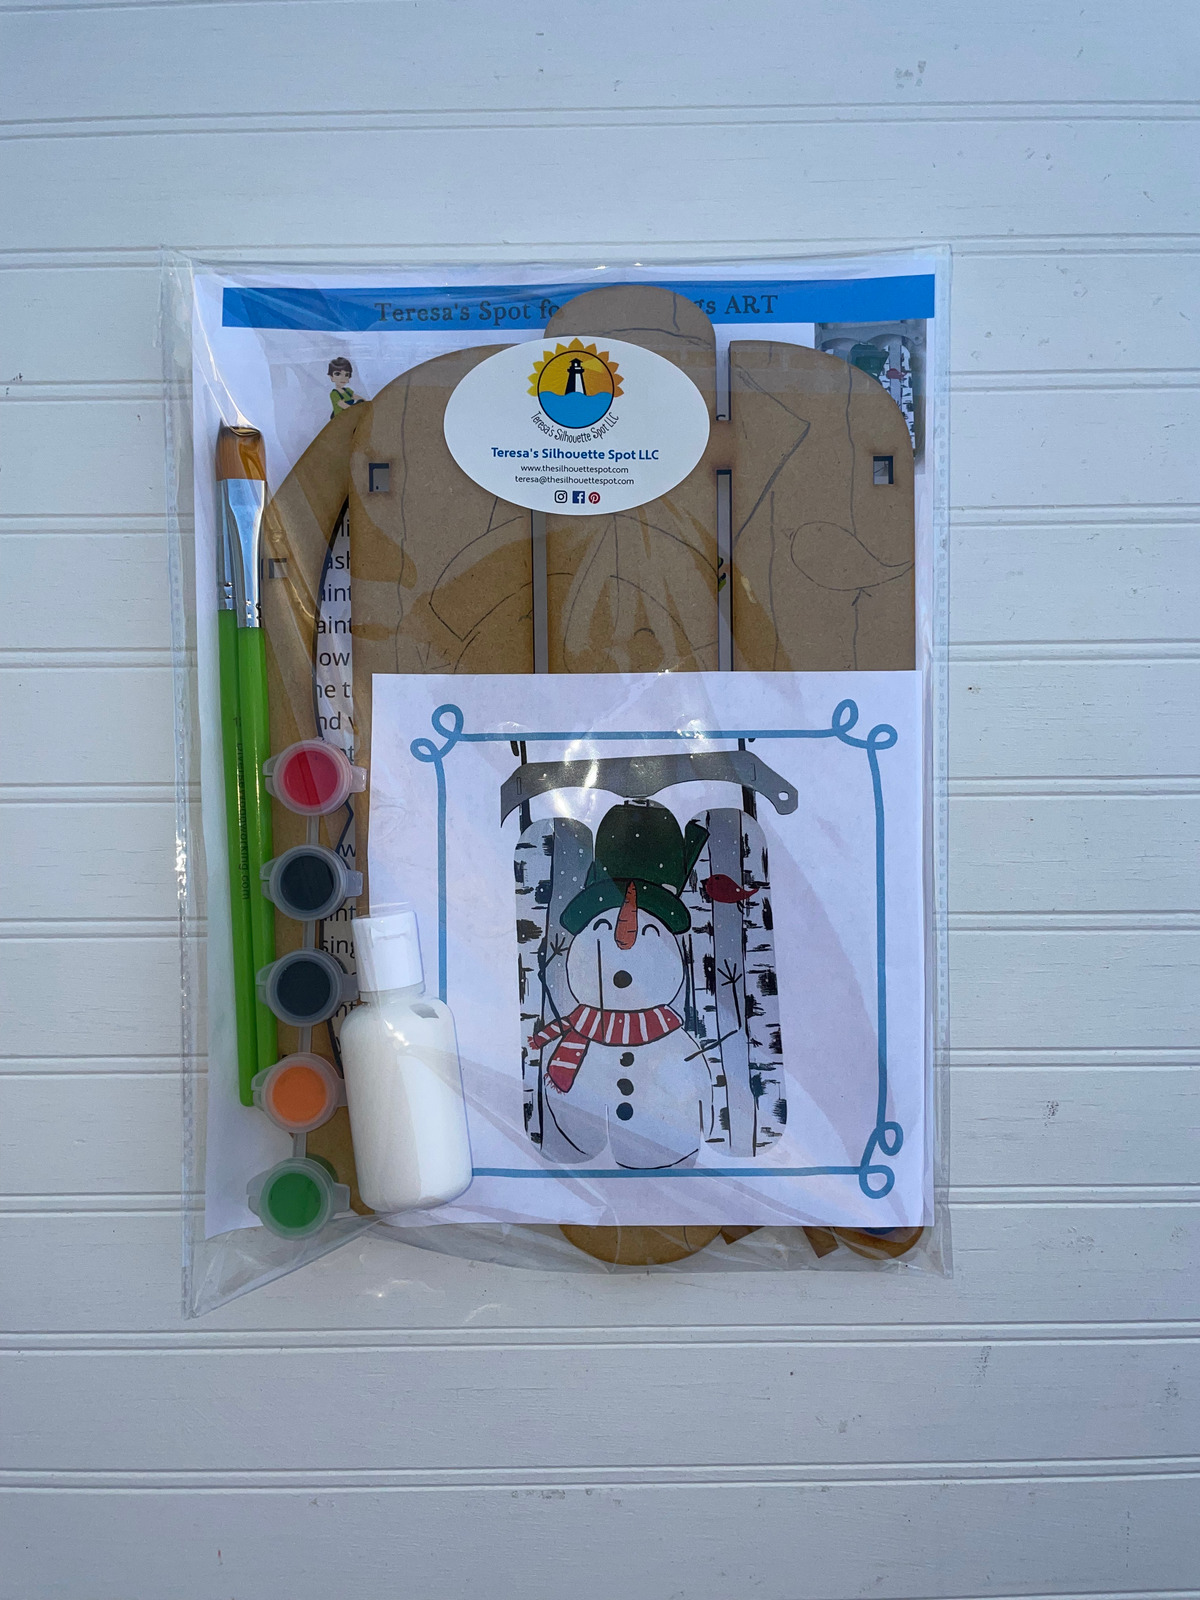 DIY Winter Deer Sled Art Kits for Kids and Adults – Teresa's Spot